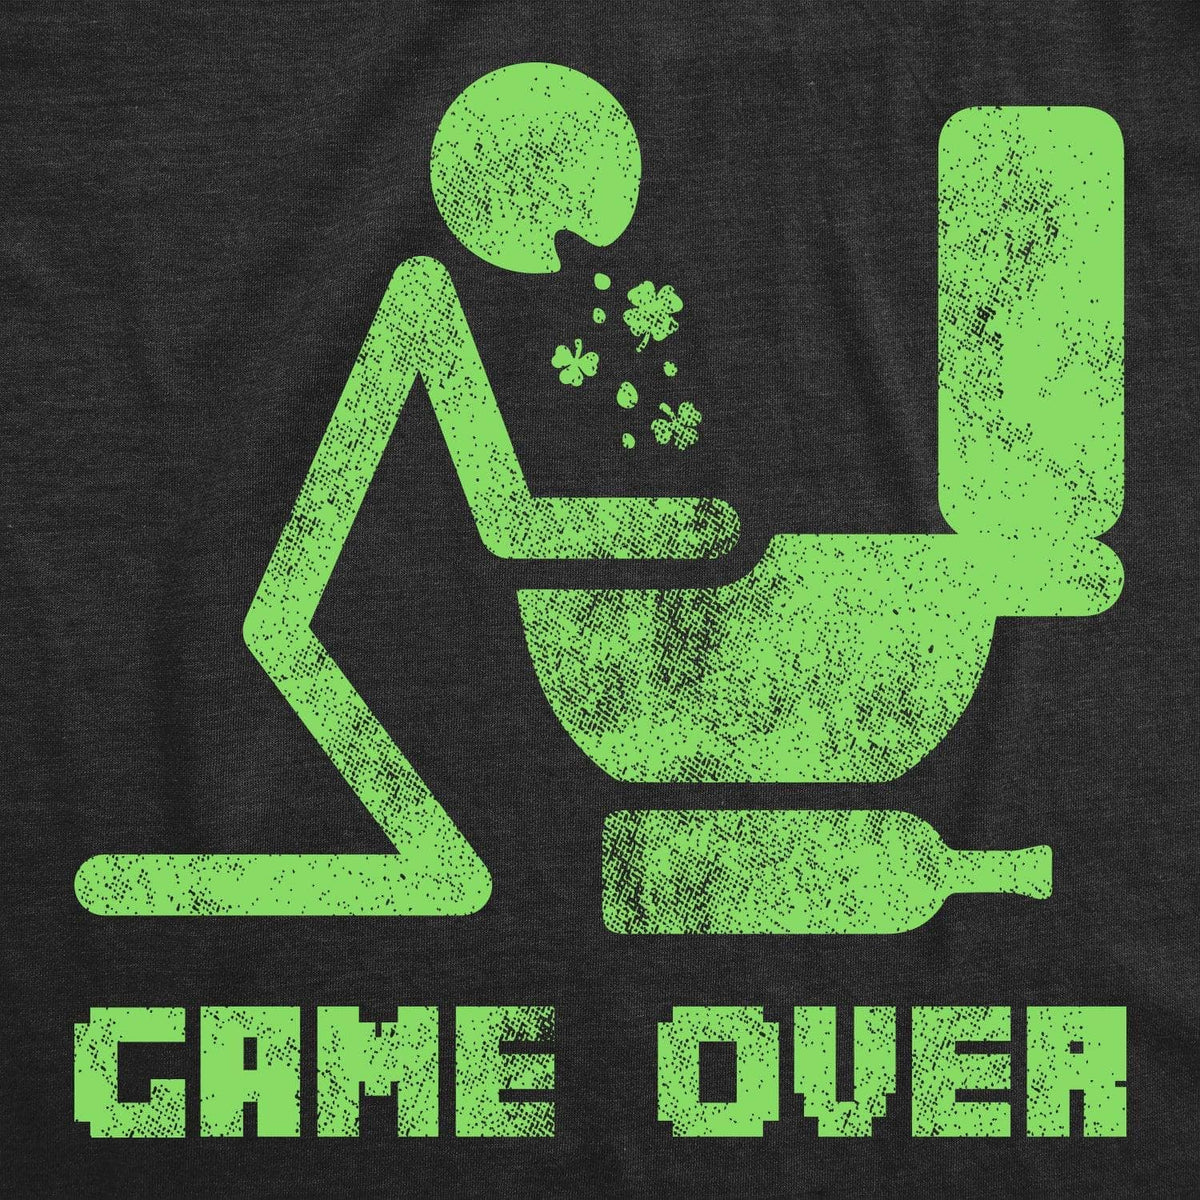 Game Over Saint Patrick&#39;s Men&#39;s Tshirt  -  Crazy Dog T-Shirts